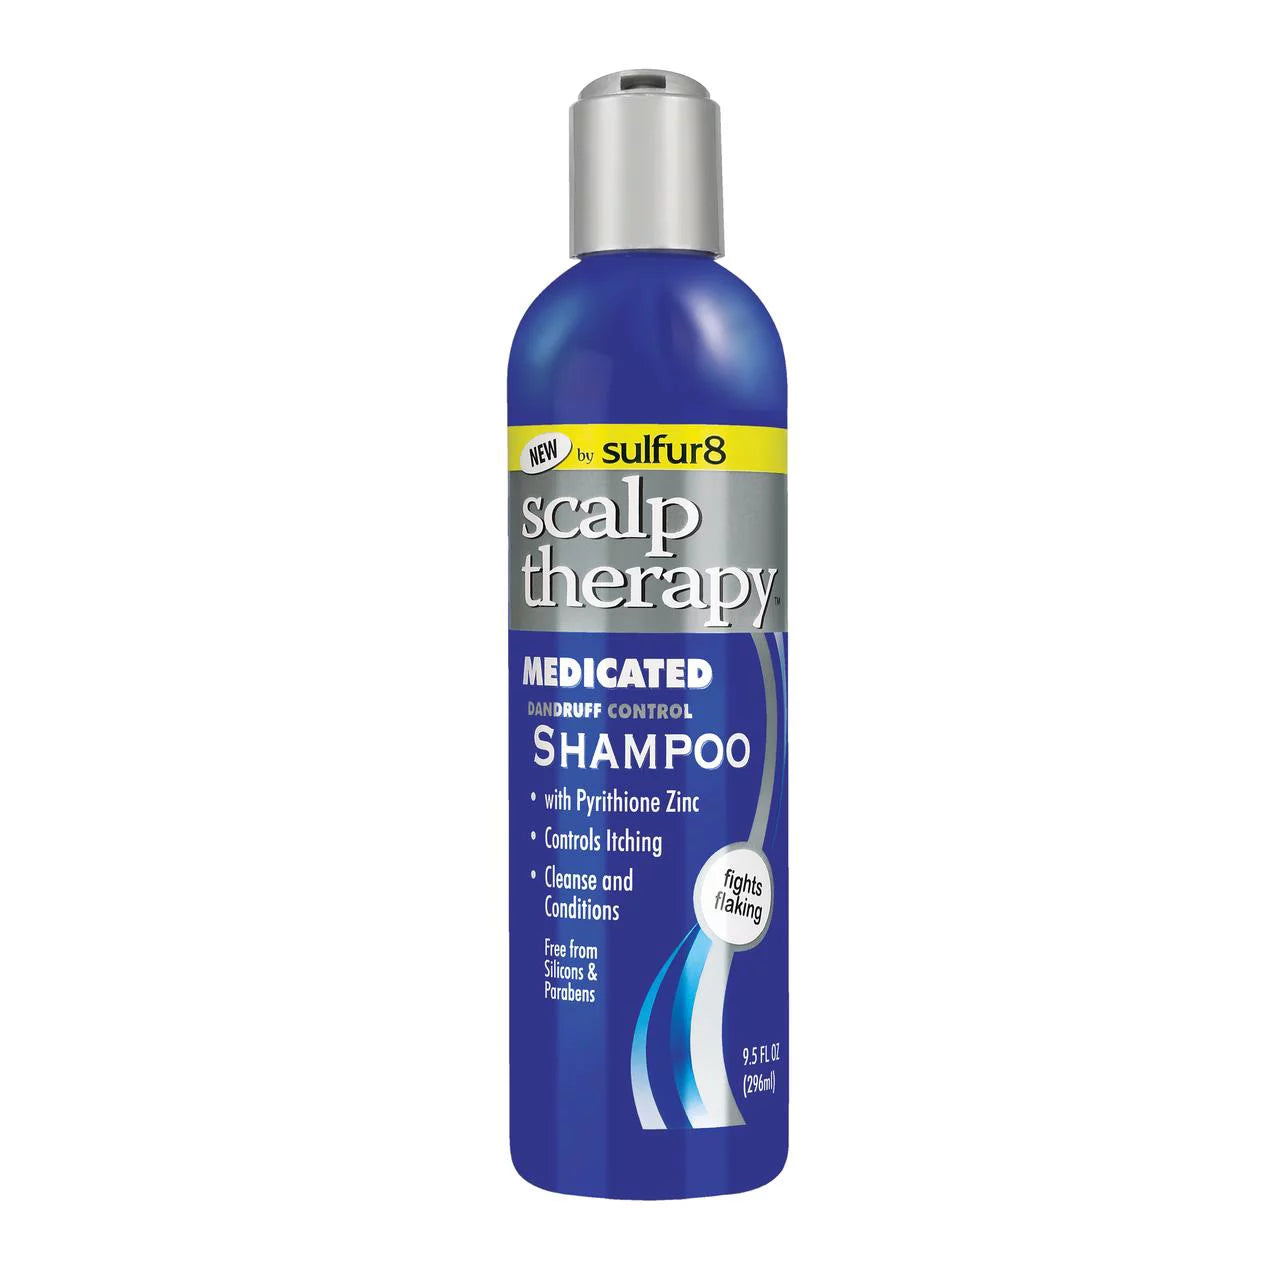 Sulfur 8 Scalp Theraphy Medicated Shampoo 9.5oz